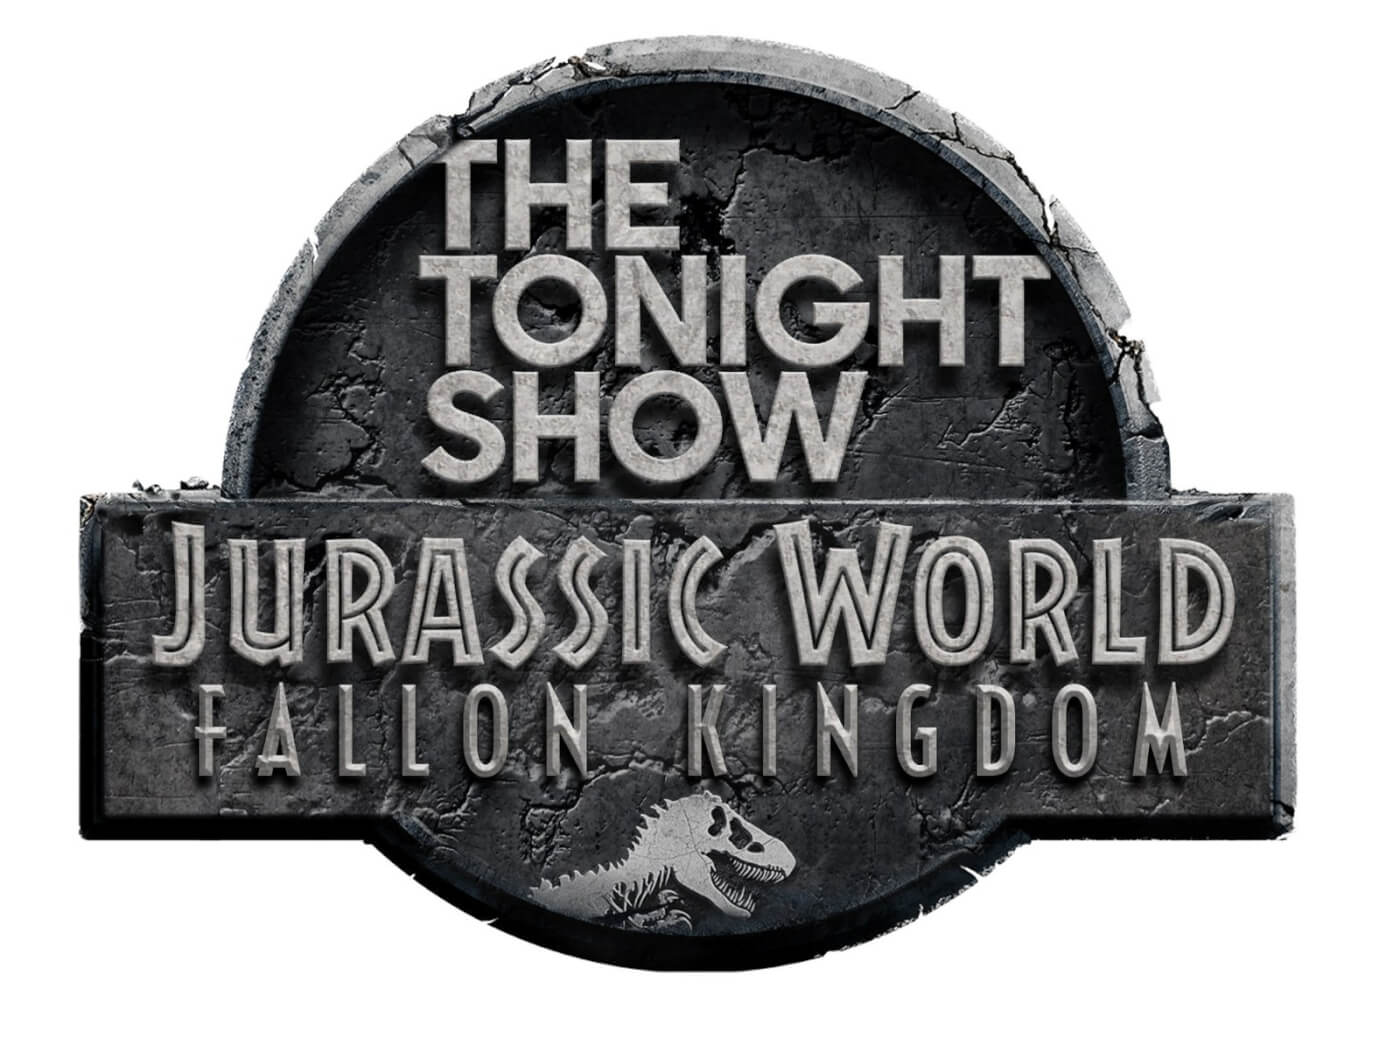 The Tonight Show becomes Jurassic World: “Fallon” Kingdom next week!